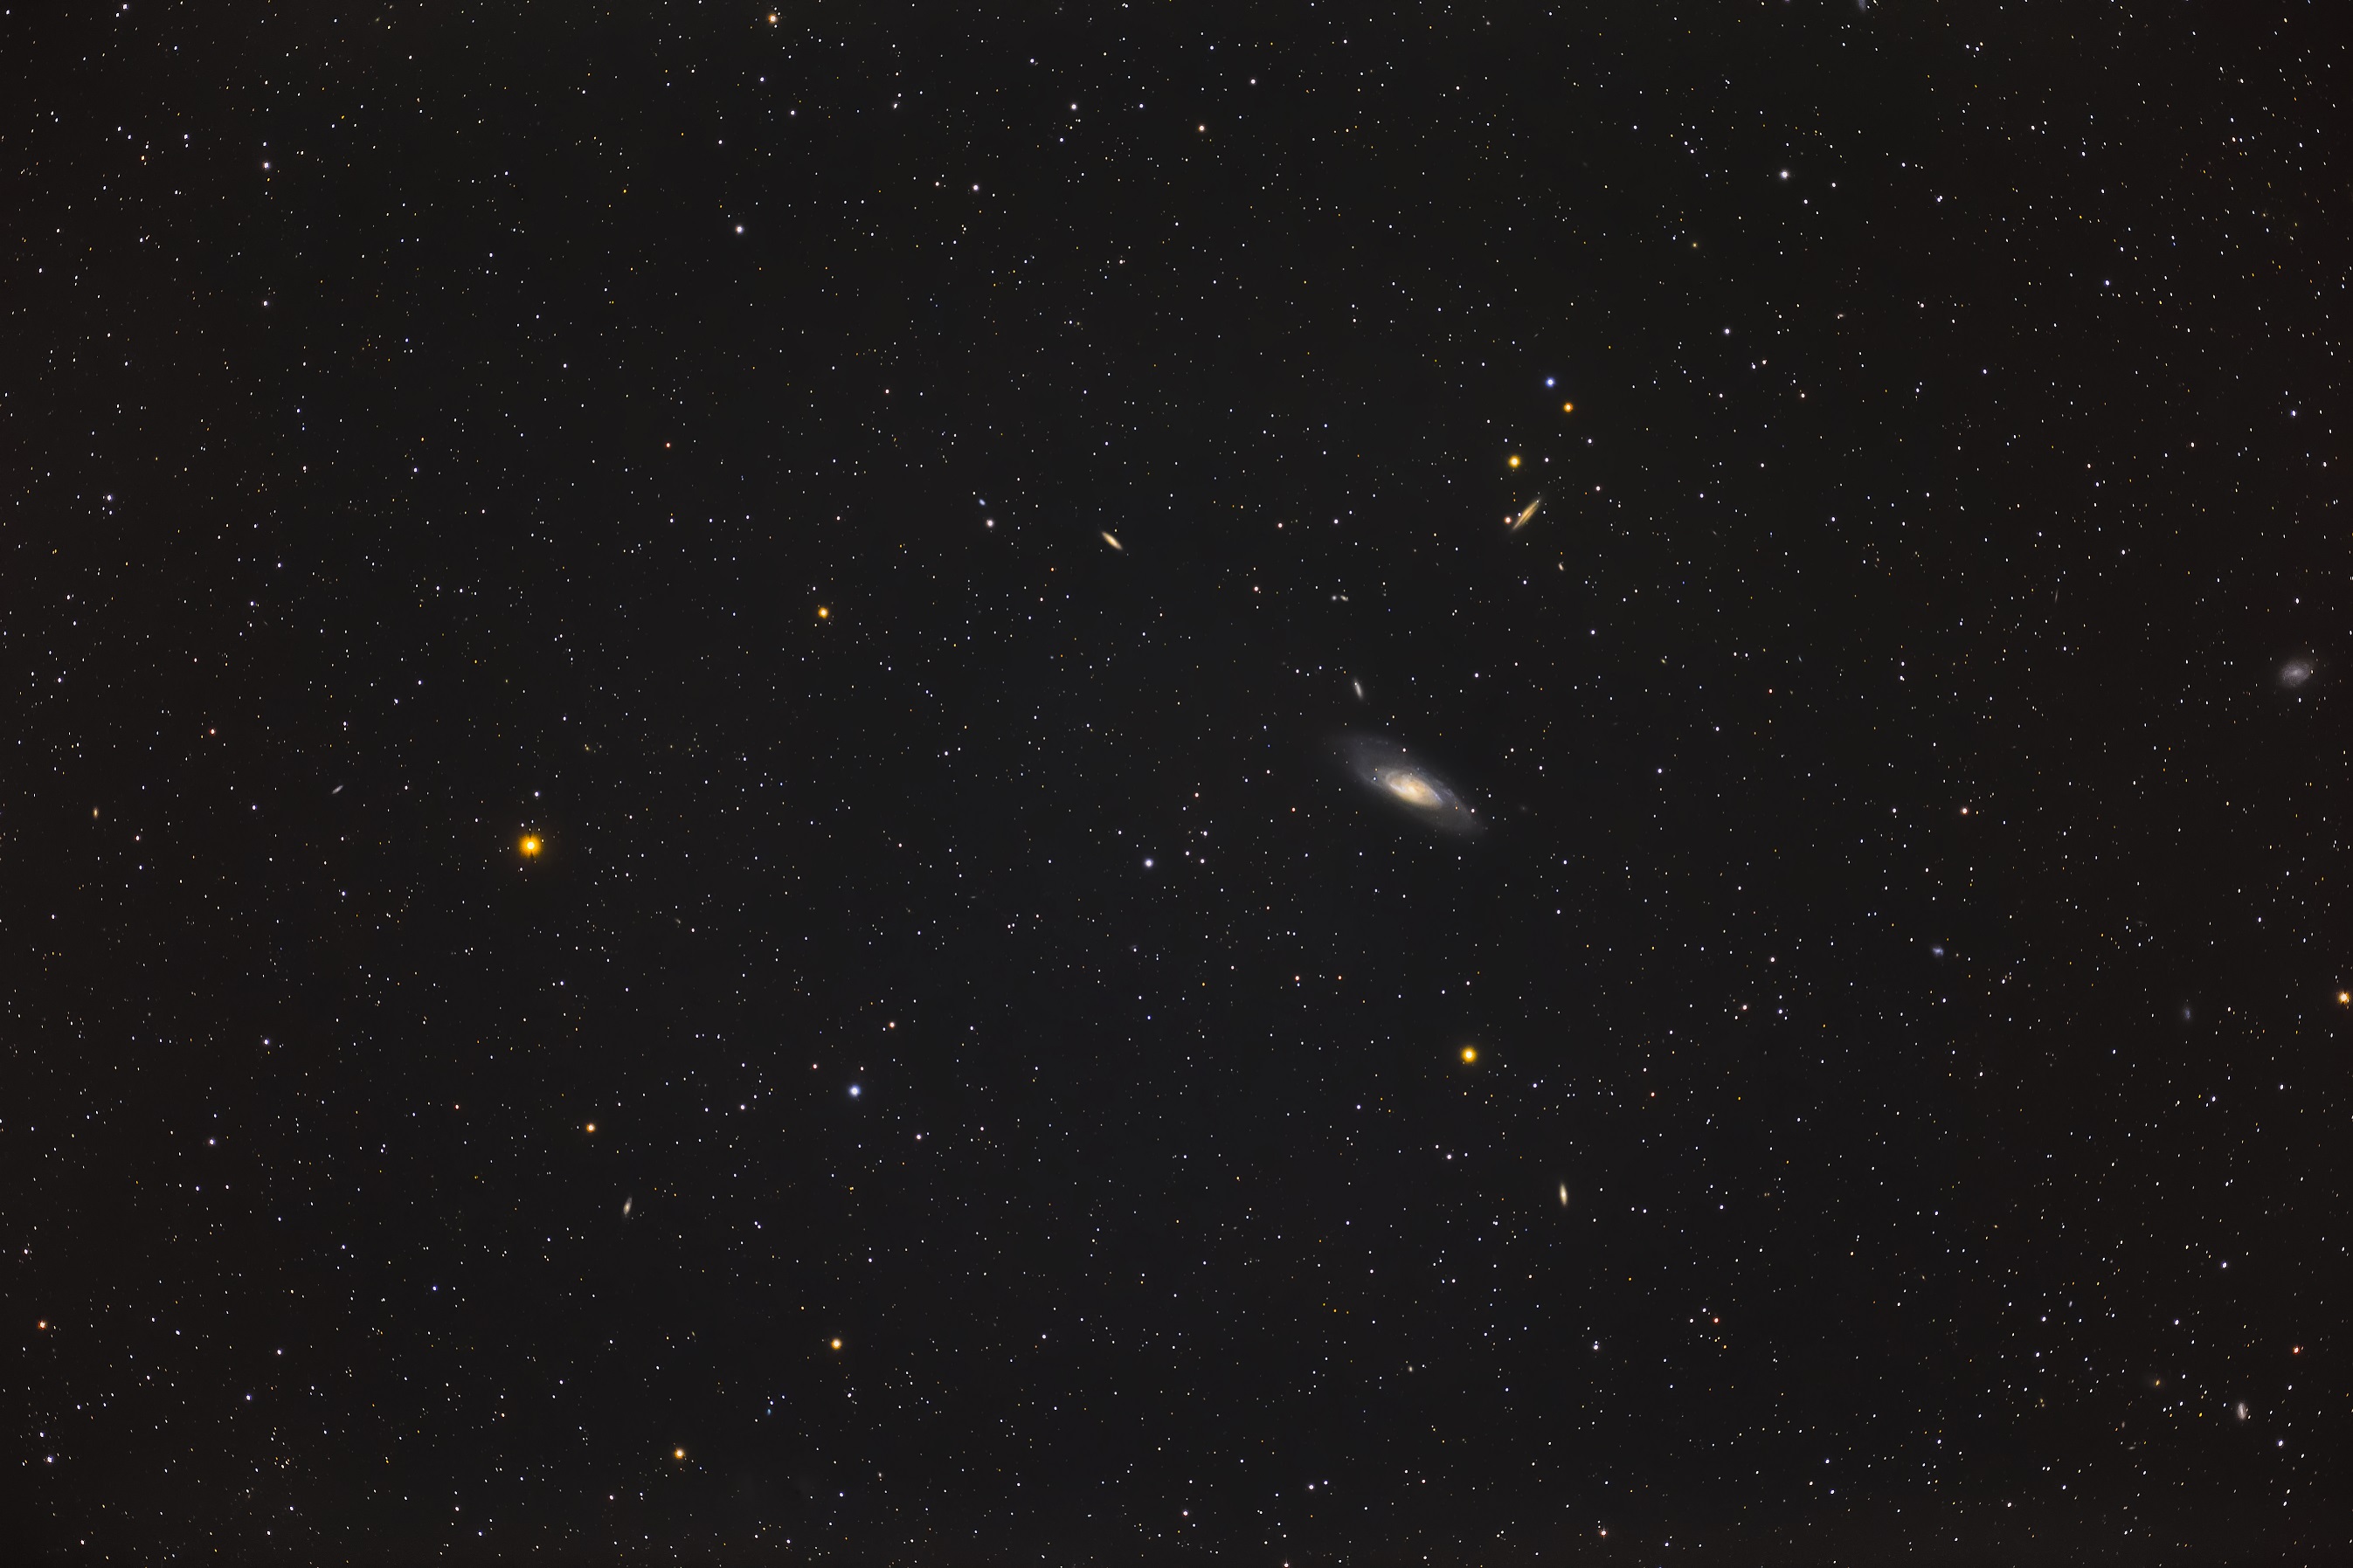 M106 Galaxy